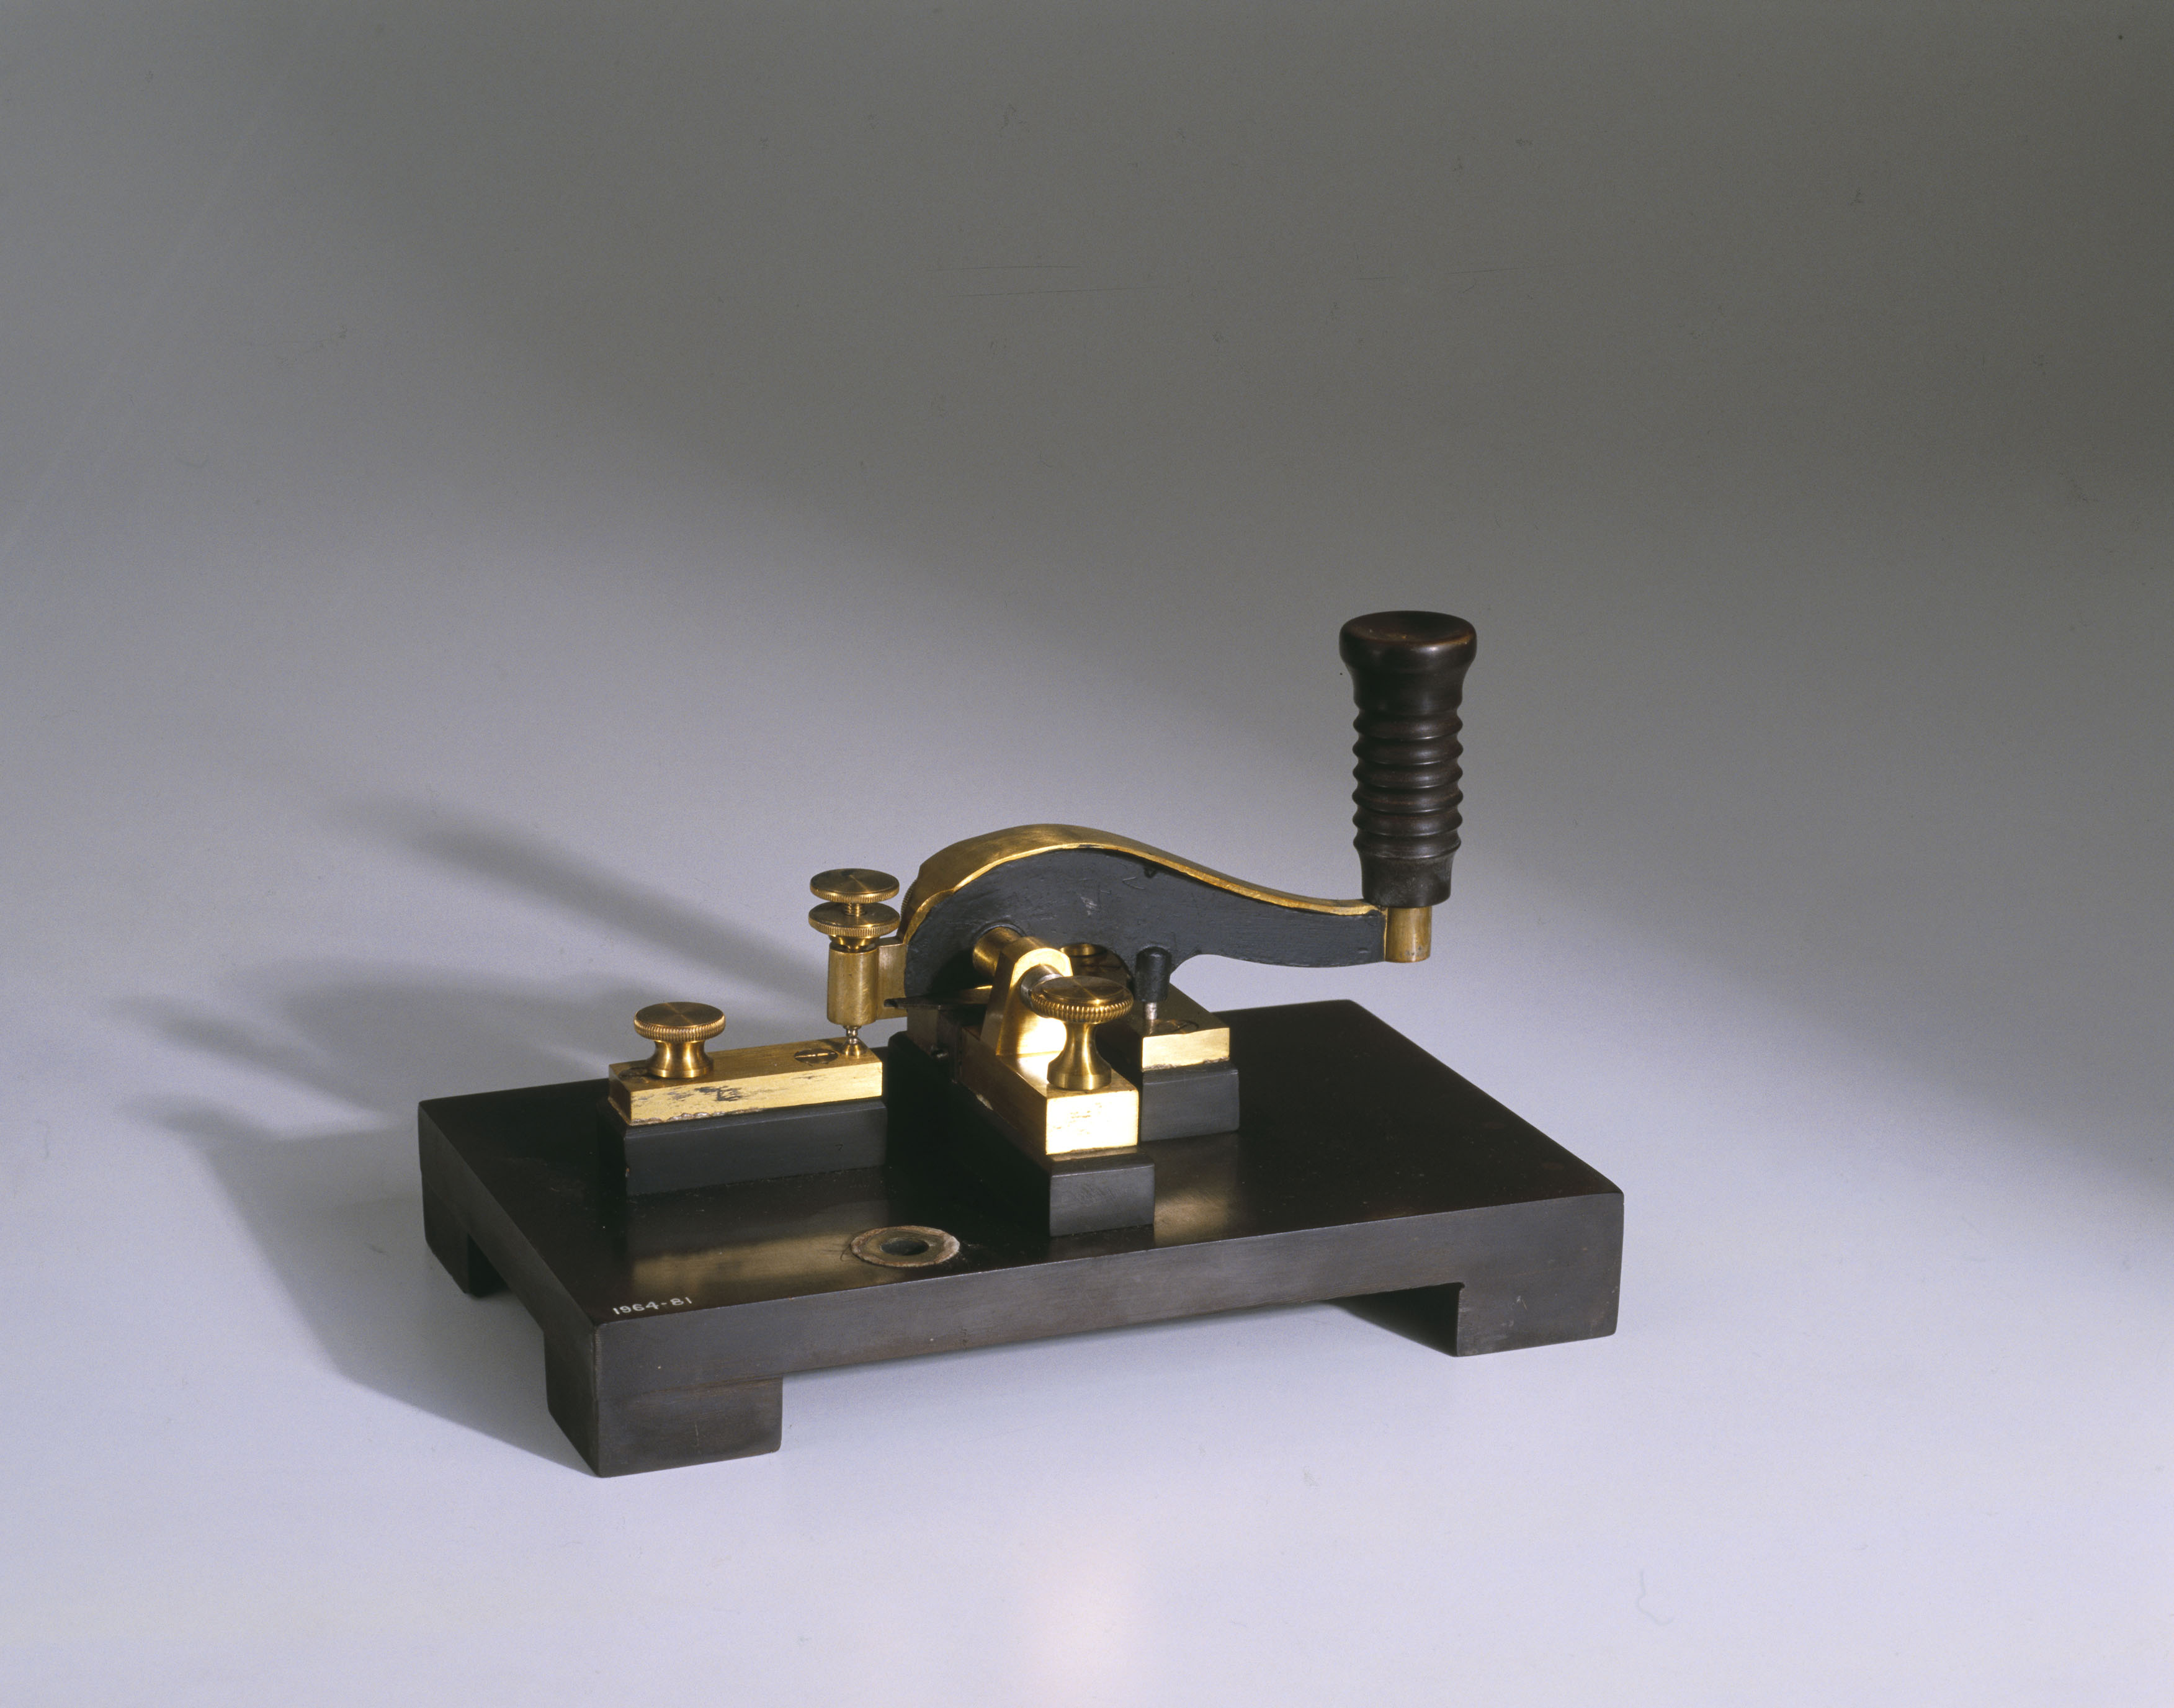 Morse key, c 1850-1870. Image credit: Science Museum / SSPL